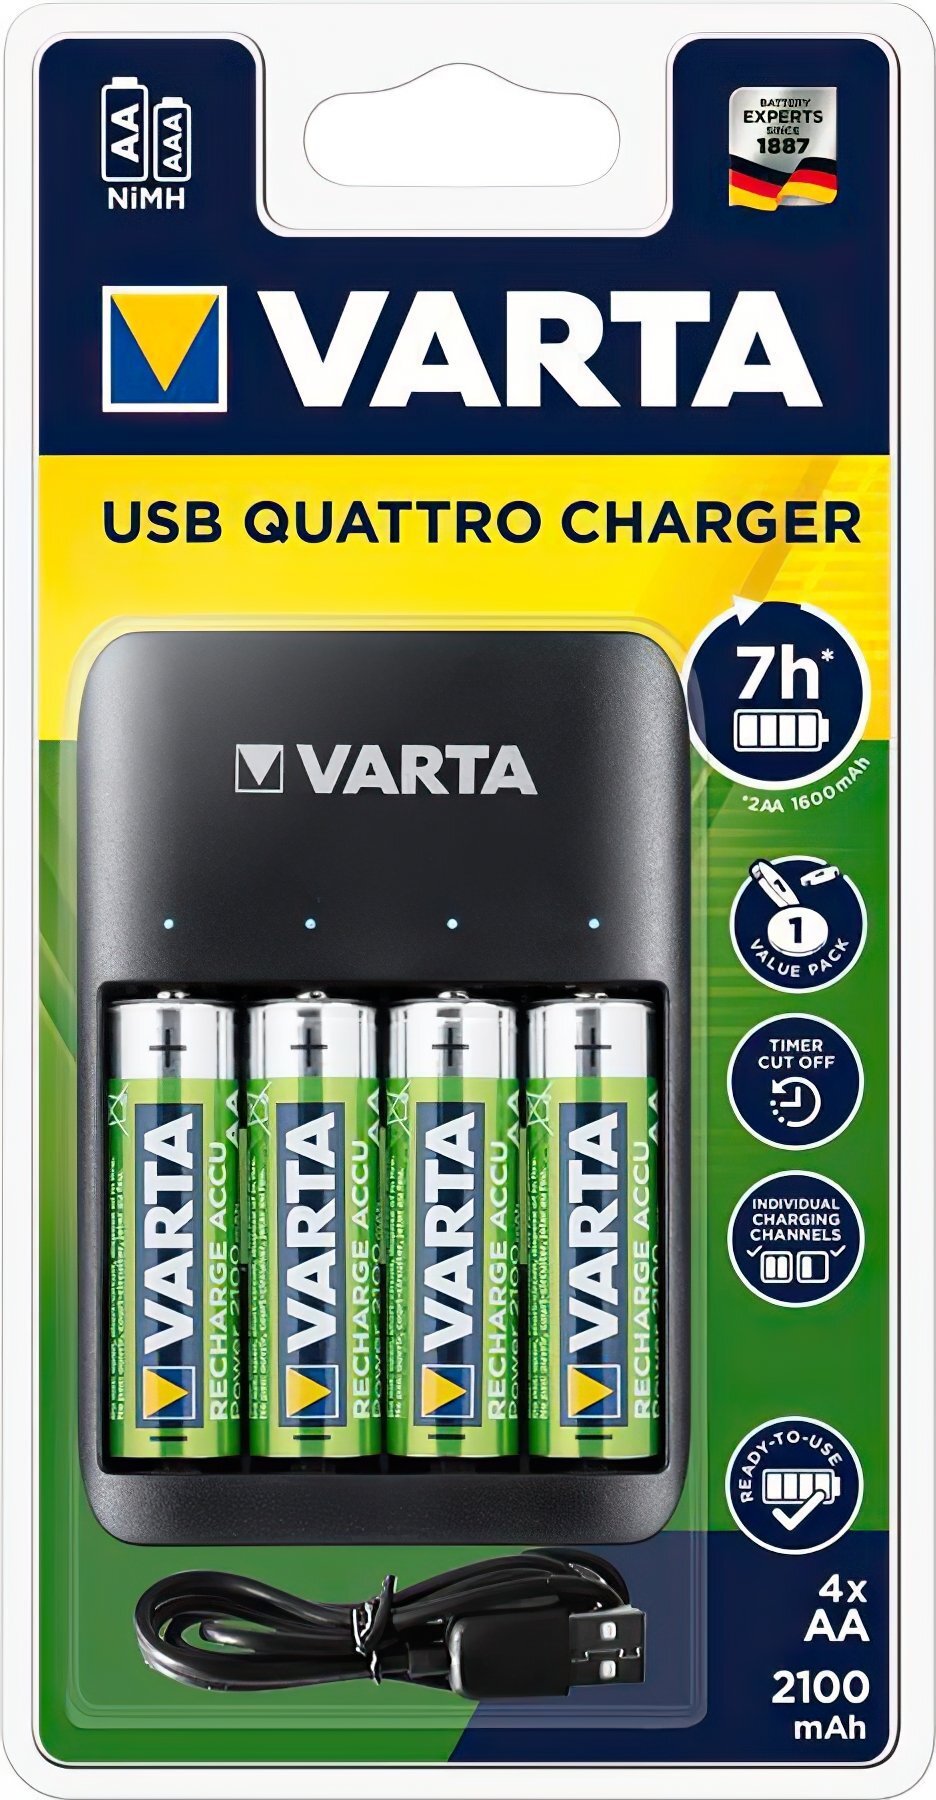 Зарядное устройство Varta Value USB Quattro Charger + Аккумулятор NI-MH AA 2100 мАч, 4 шт. (57652101451) фото 1